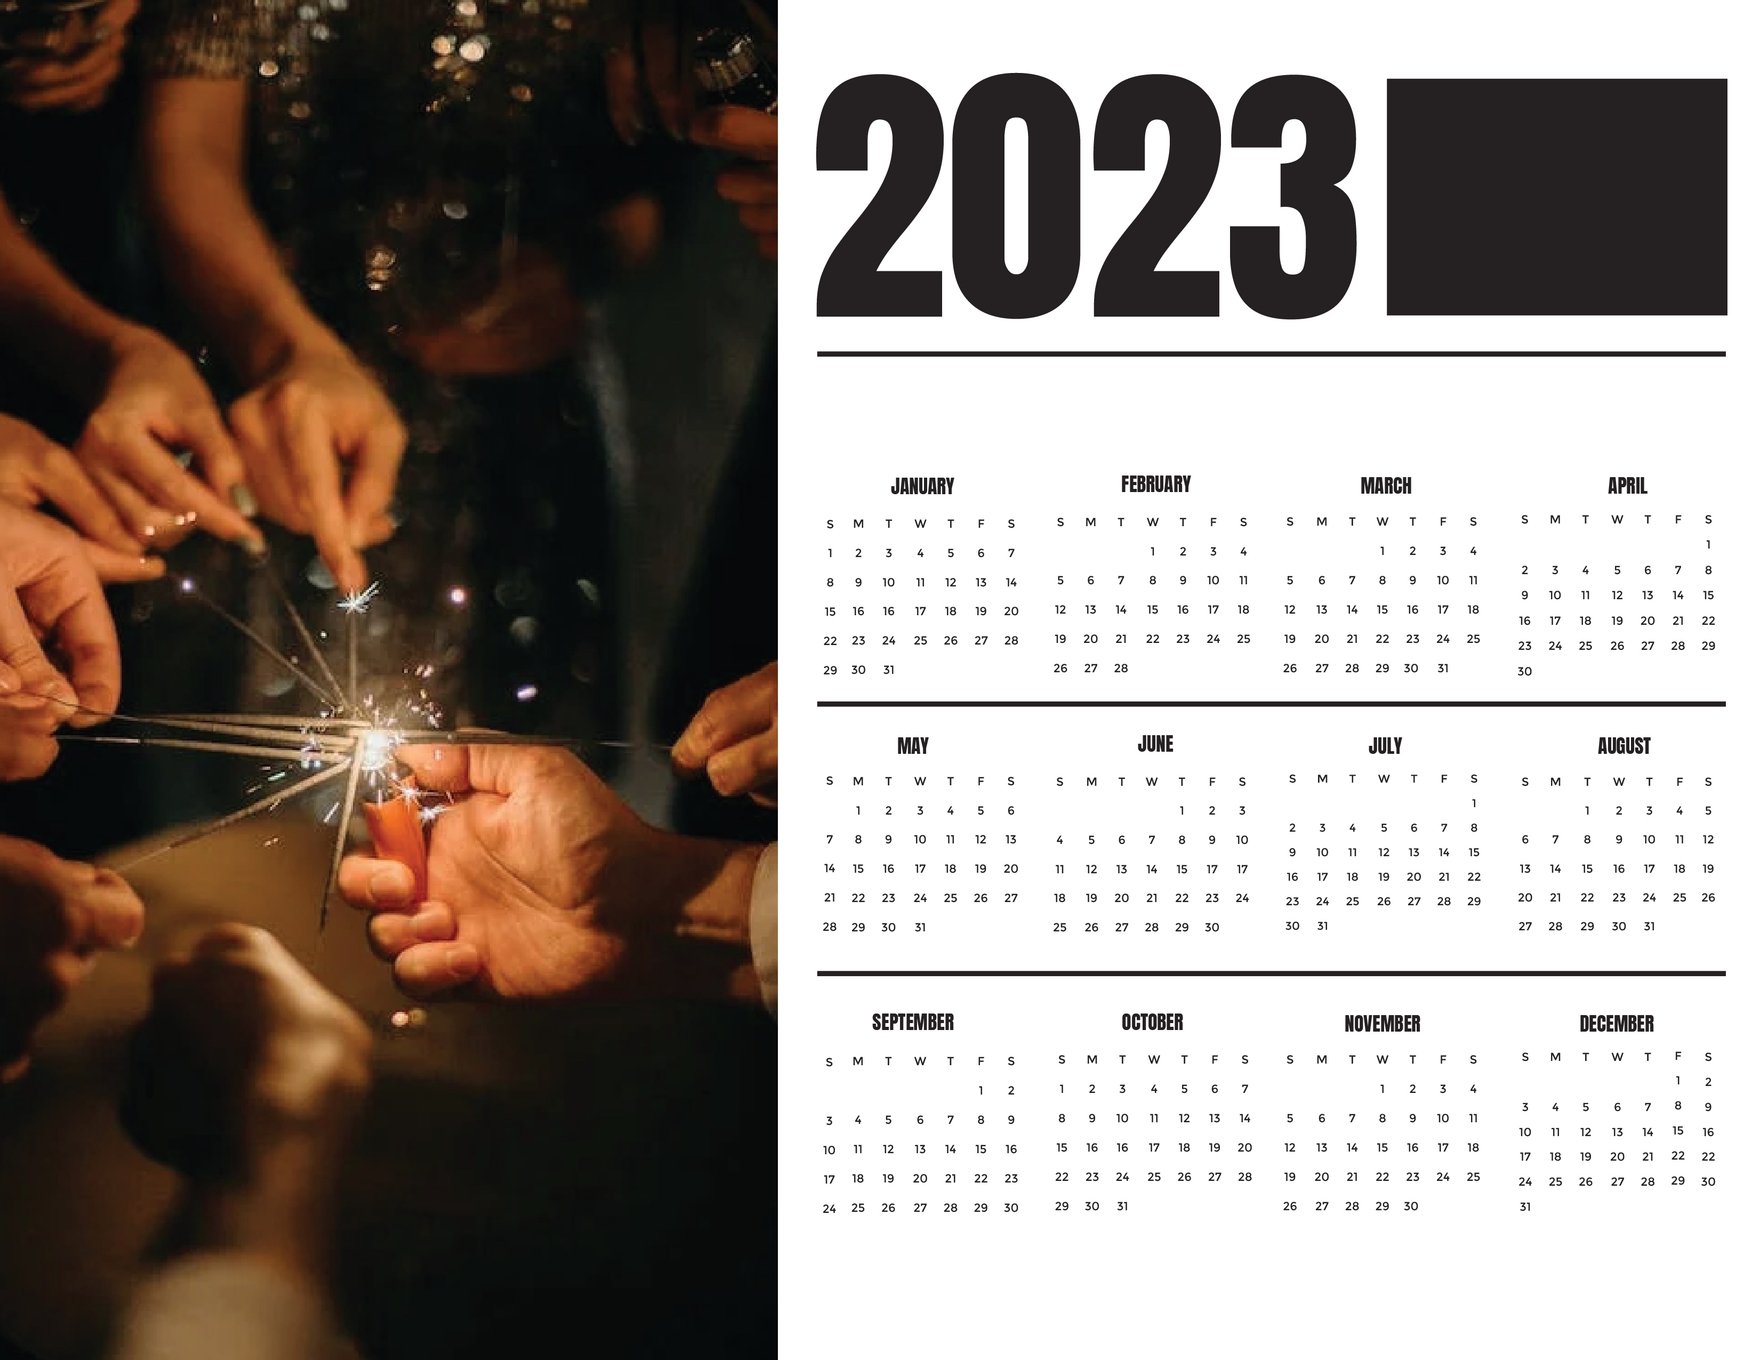 2023 Photo Calendar Template in Word, Illustrator, PSD